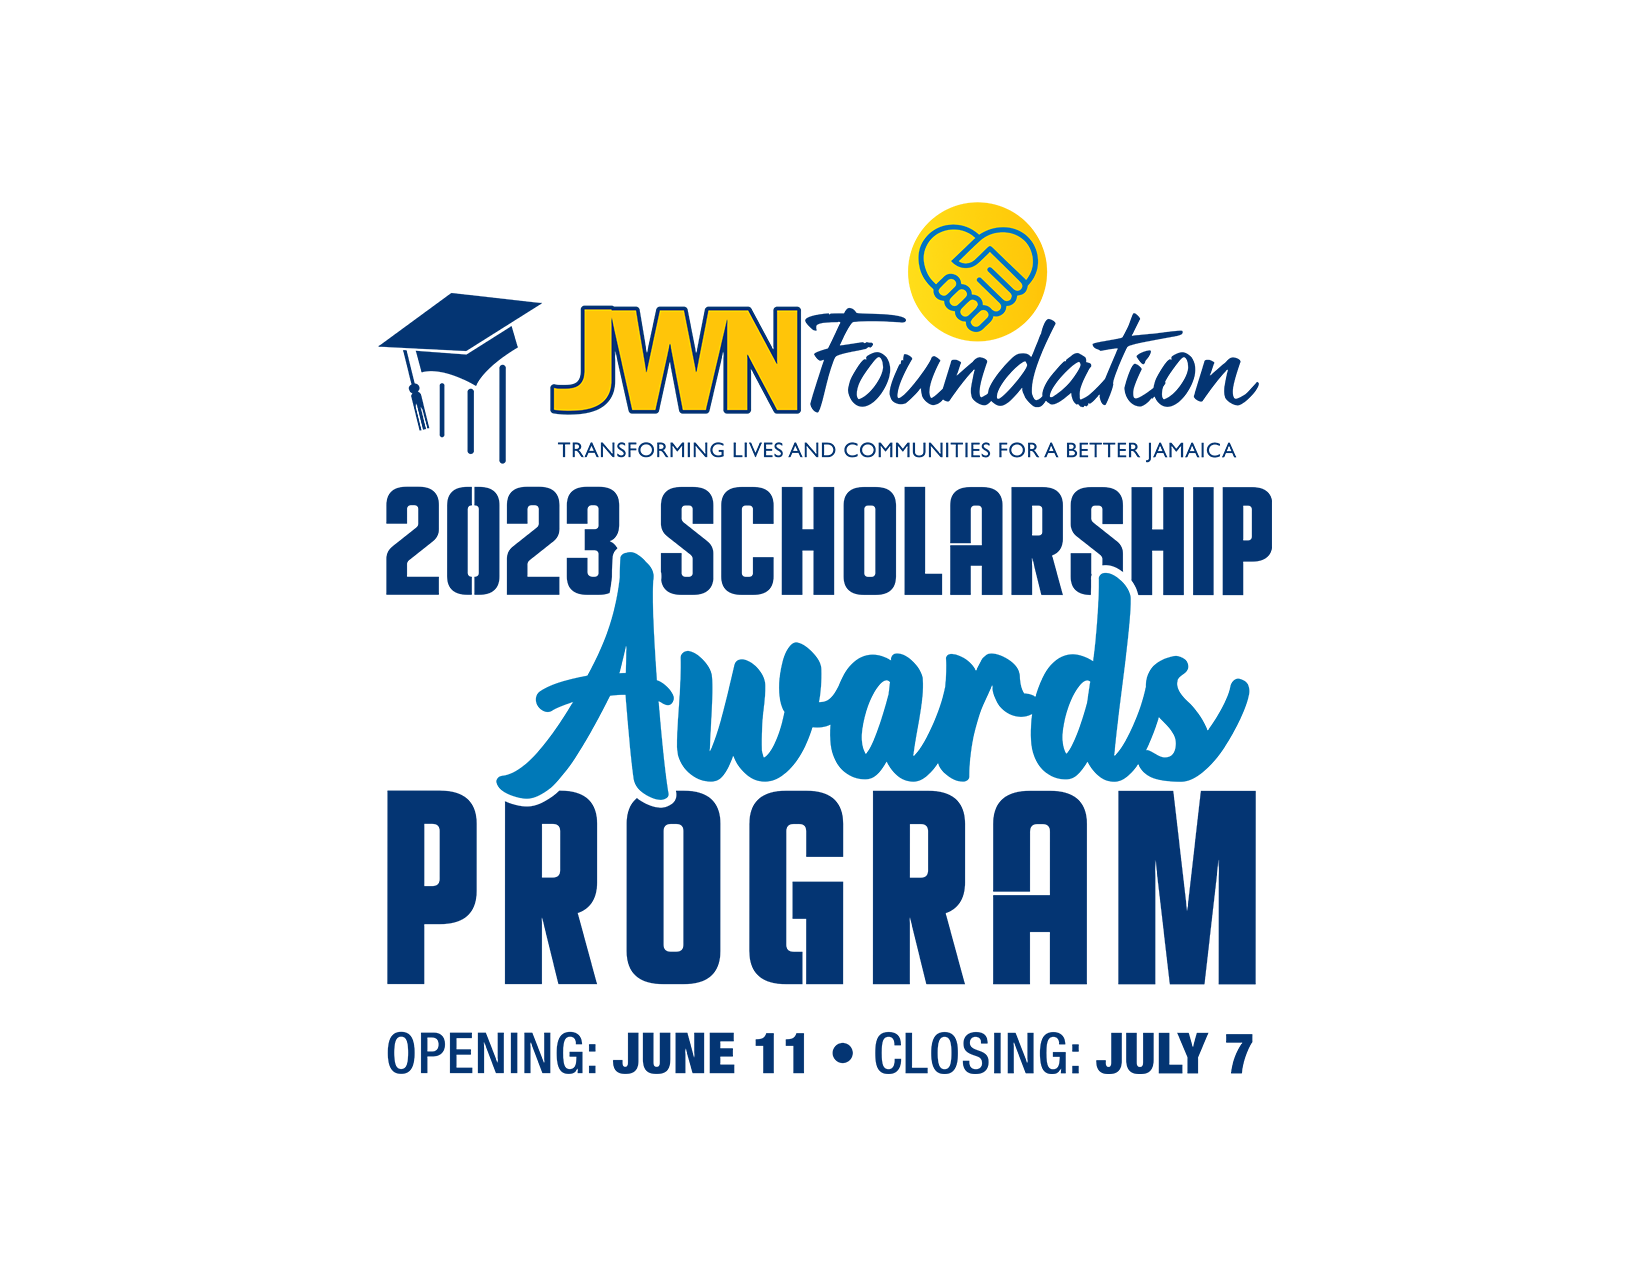 Scholarship - The JWN Foundation